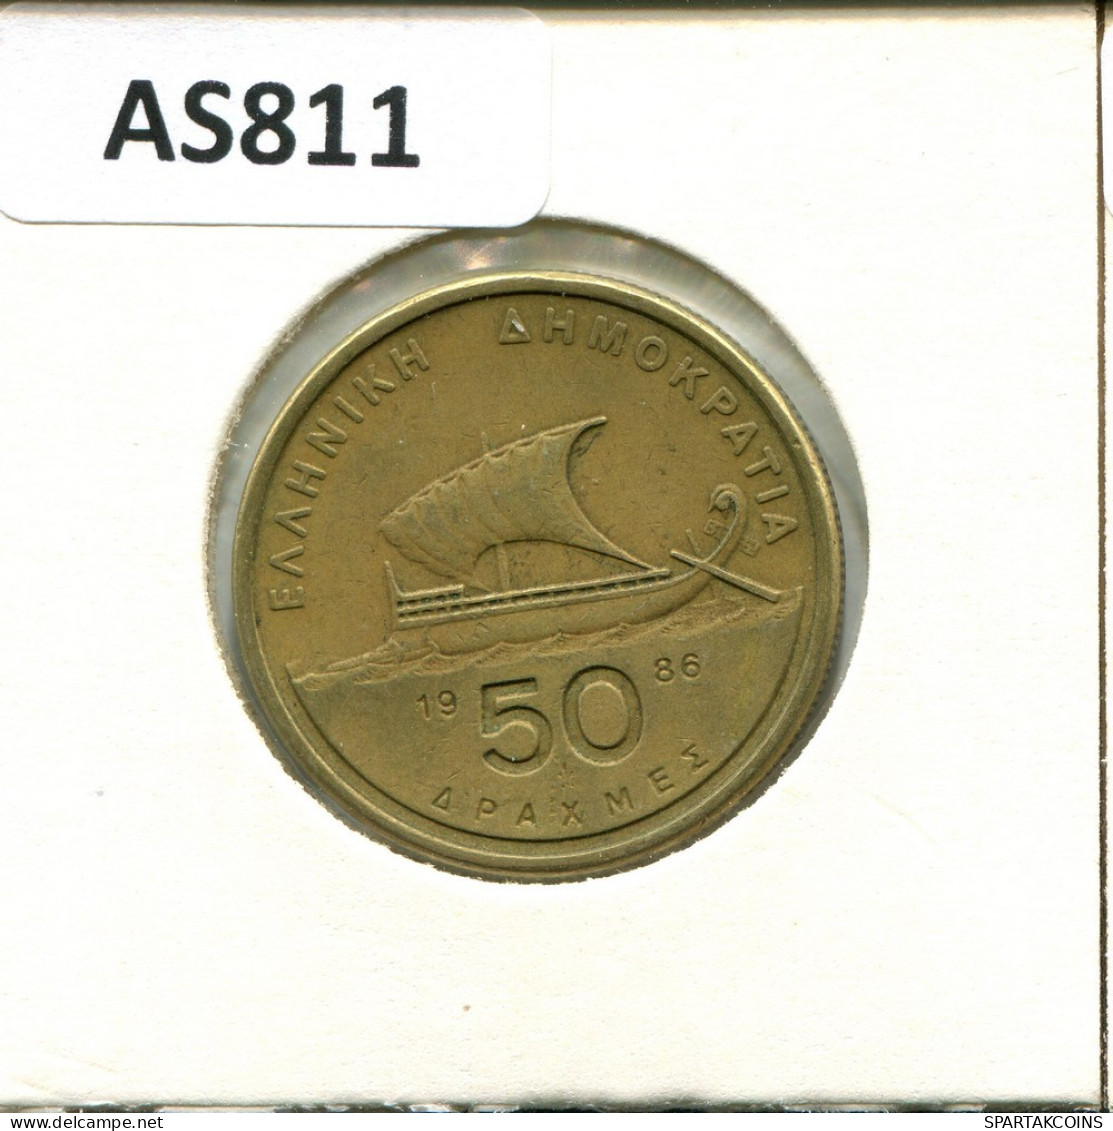 50 DRACHMES 1986 GRIECHENLAND GREECE Münze #AS811.D.A - Grecia